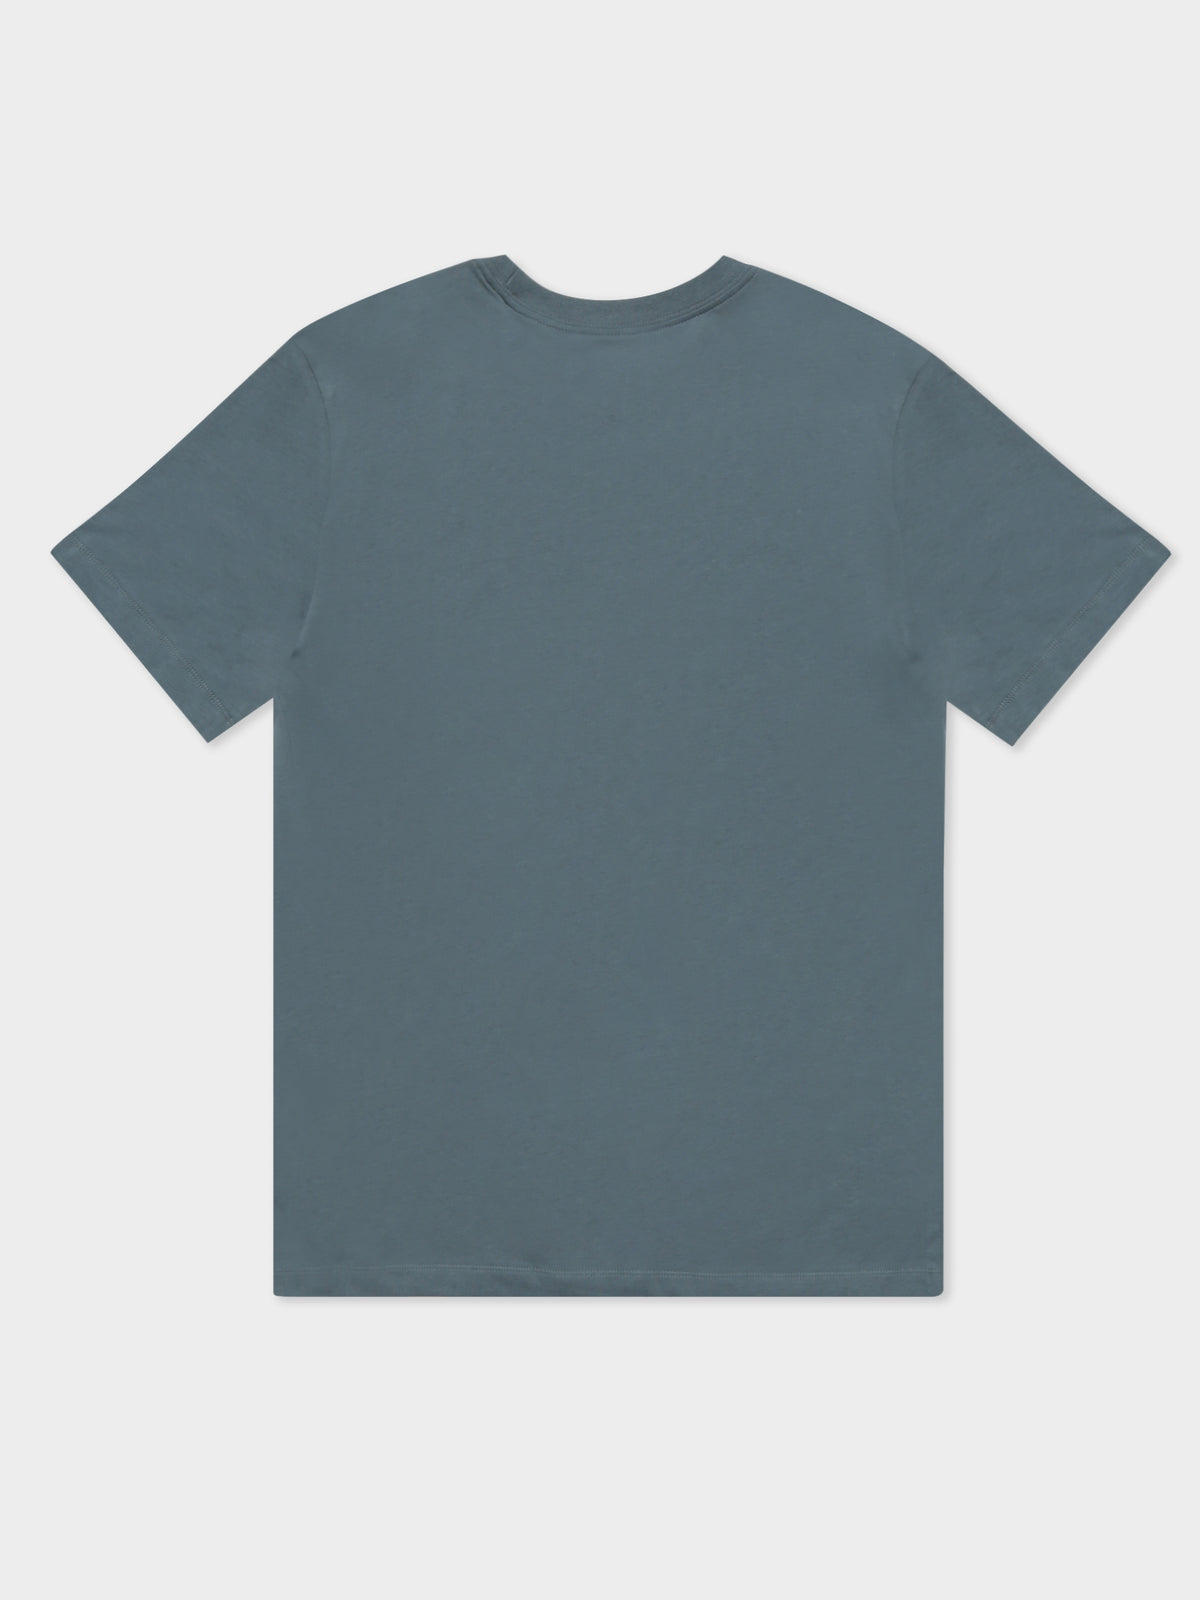 NSW Club Crew T-Shirt in Blue